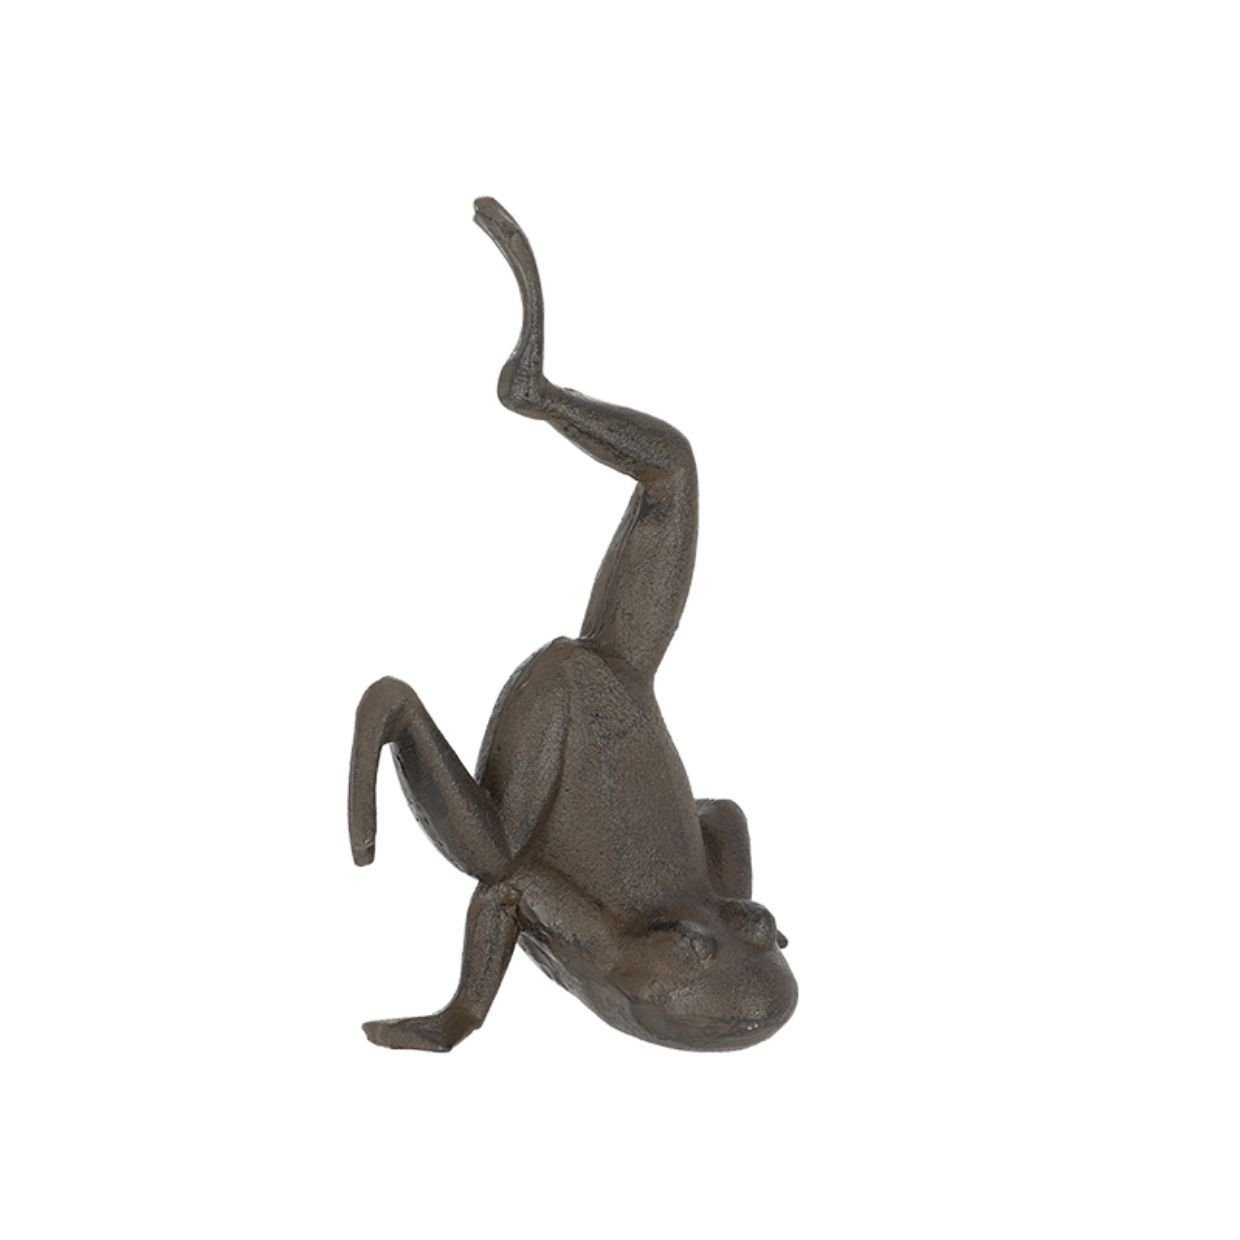 Rivanto Türstopper, Gusseisen Türstopper Frosch, 2 kg, 13 x 23 x 30 cm